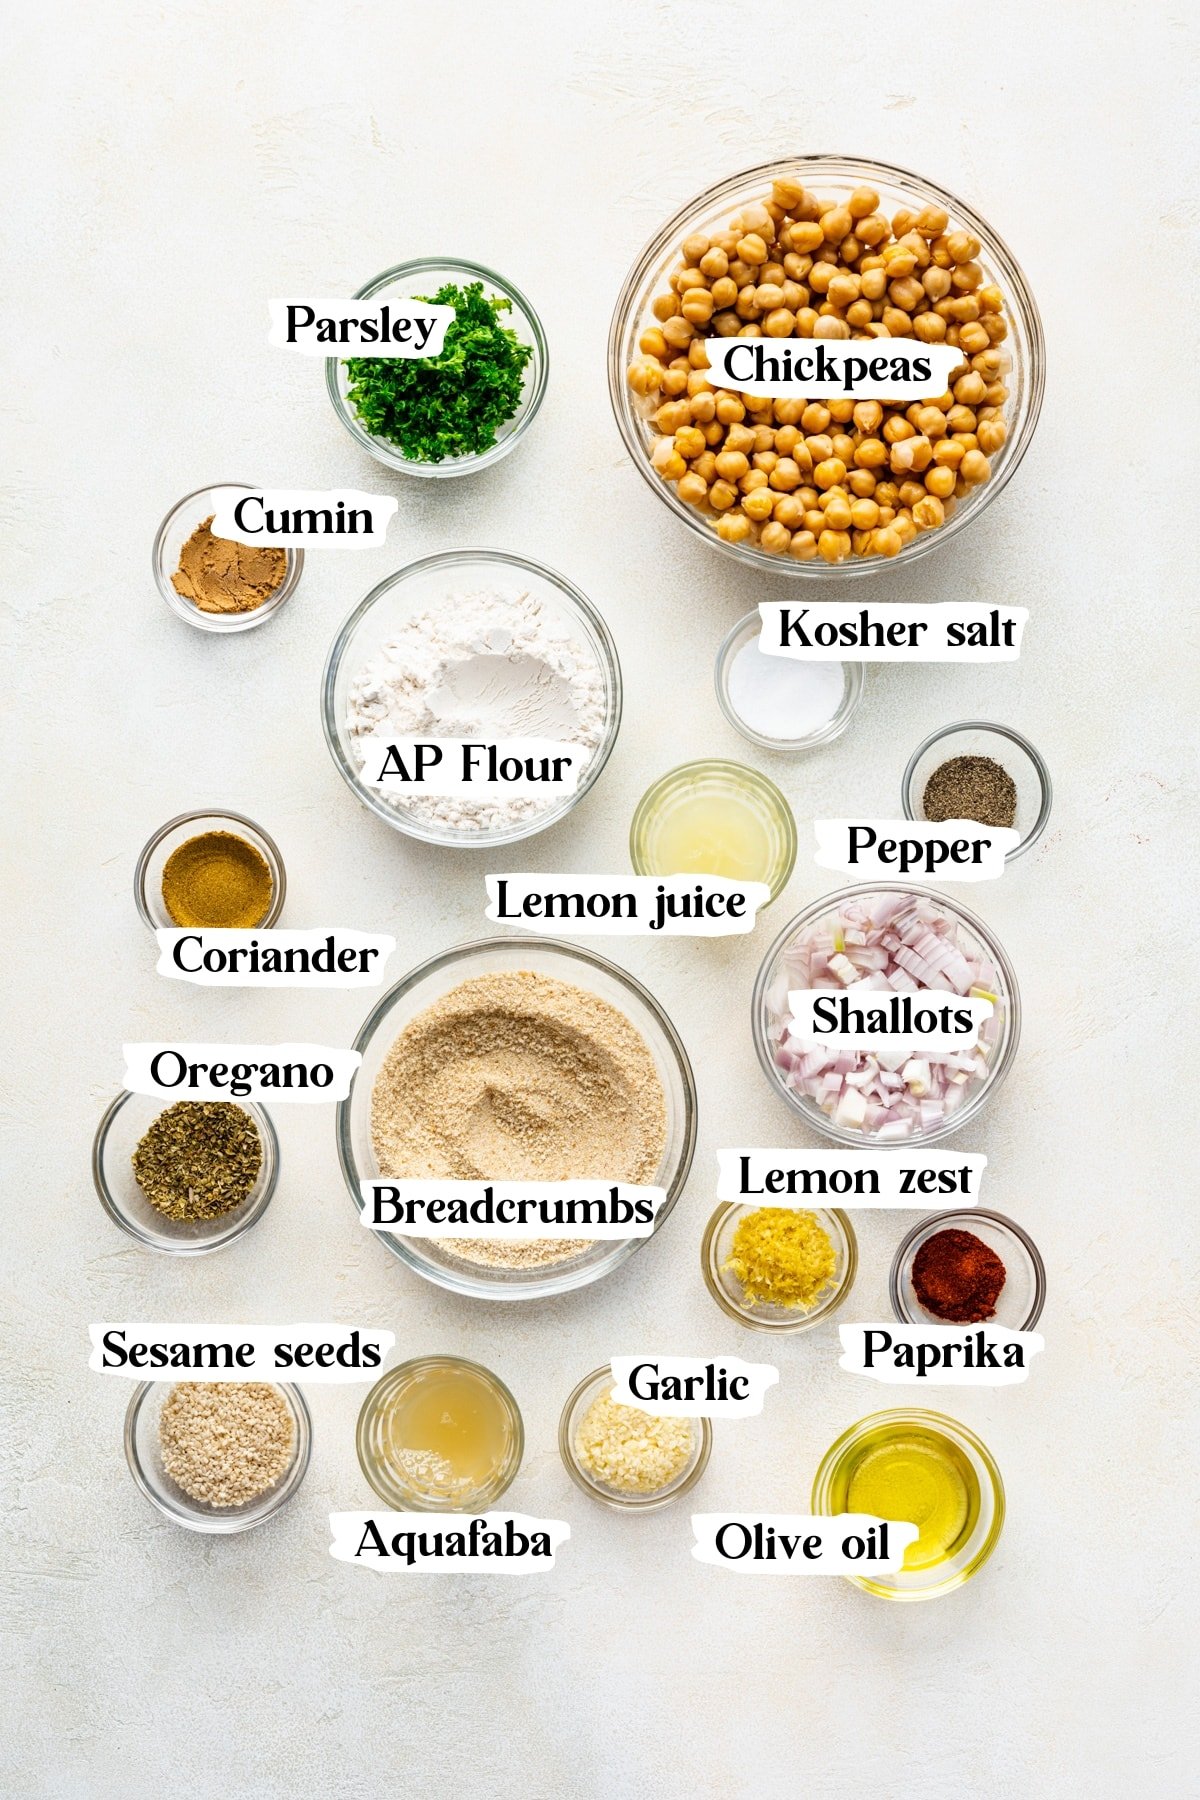 Vegan chickpea fritter ingredients: parsley, chickpeas, cumin, ap flour, kosher salt, pepper, lemon juice, coriander, oregano, breadcrumbs, shallots, lemon zest, paprika, sesame seeds, aqua faba, garlic, olive oil.